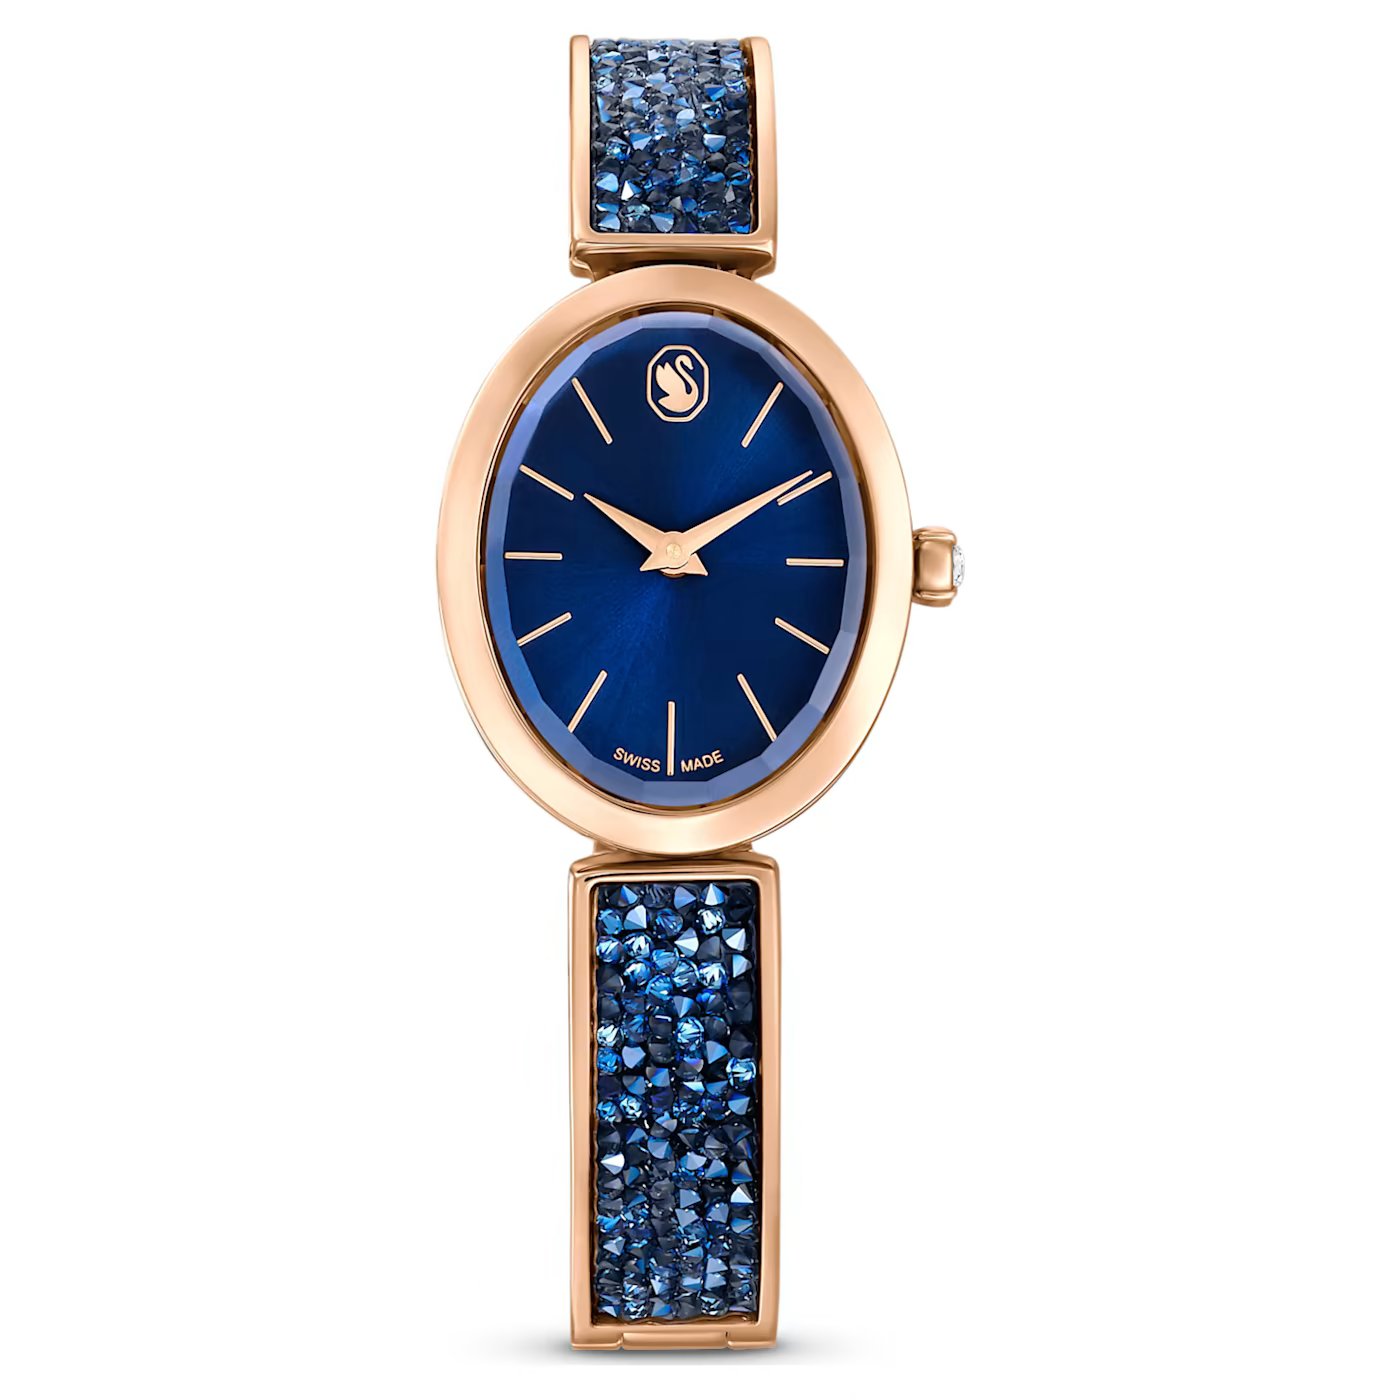 64aeea91dba94_crystal-rock-oval-watch--swiss-made--metal-bracelet--blue--rose-gold-tone-finish-swarovski-5656822 (2).jpg